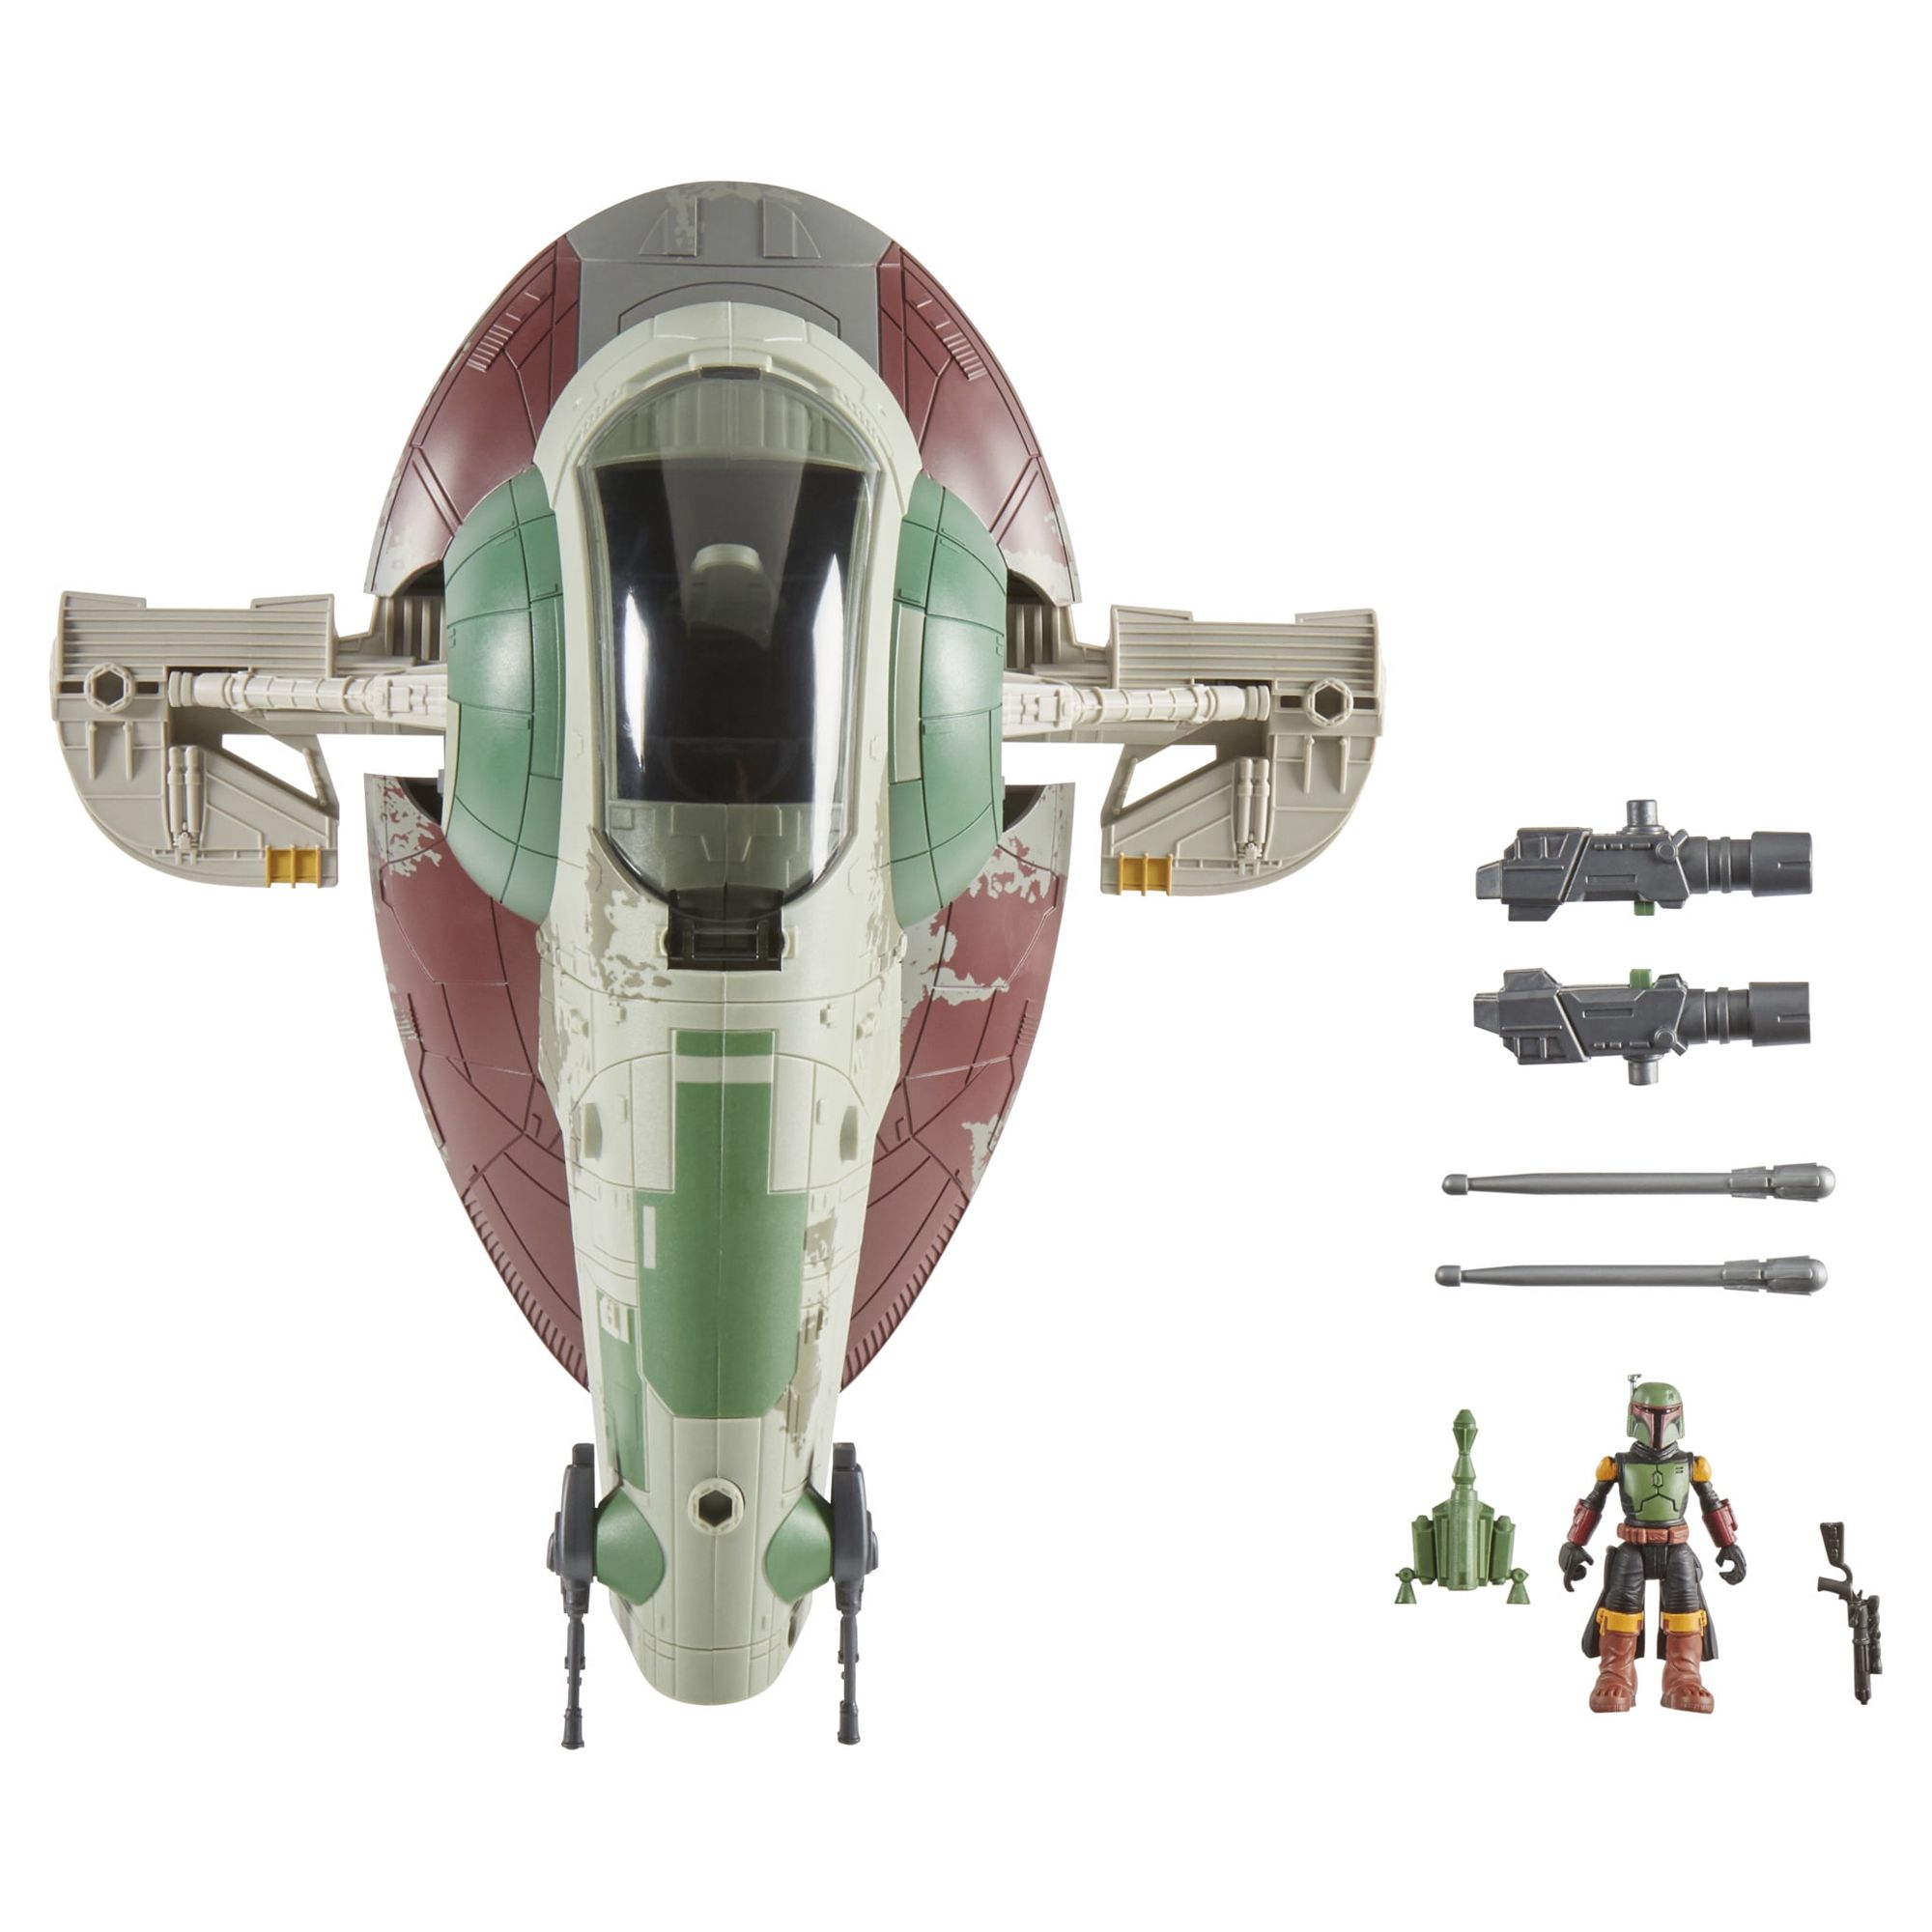 Star Wars Mission Fleet Starship Skirmish, Boba Fett Action Figure and Starship - image 1 of 11